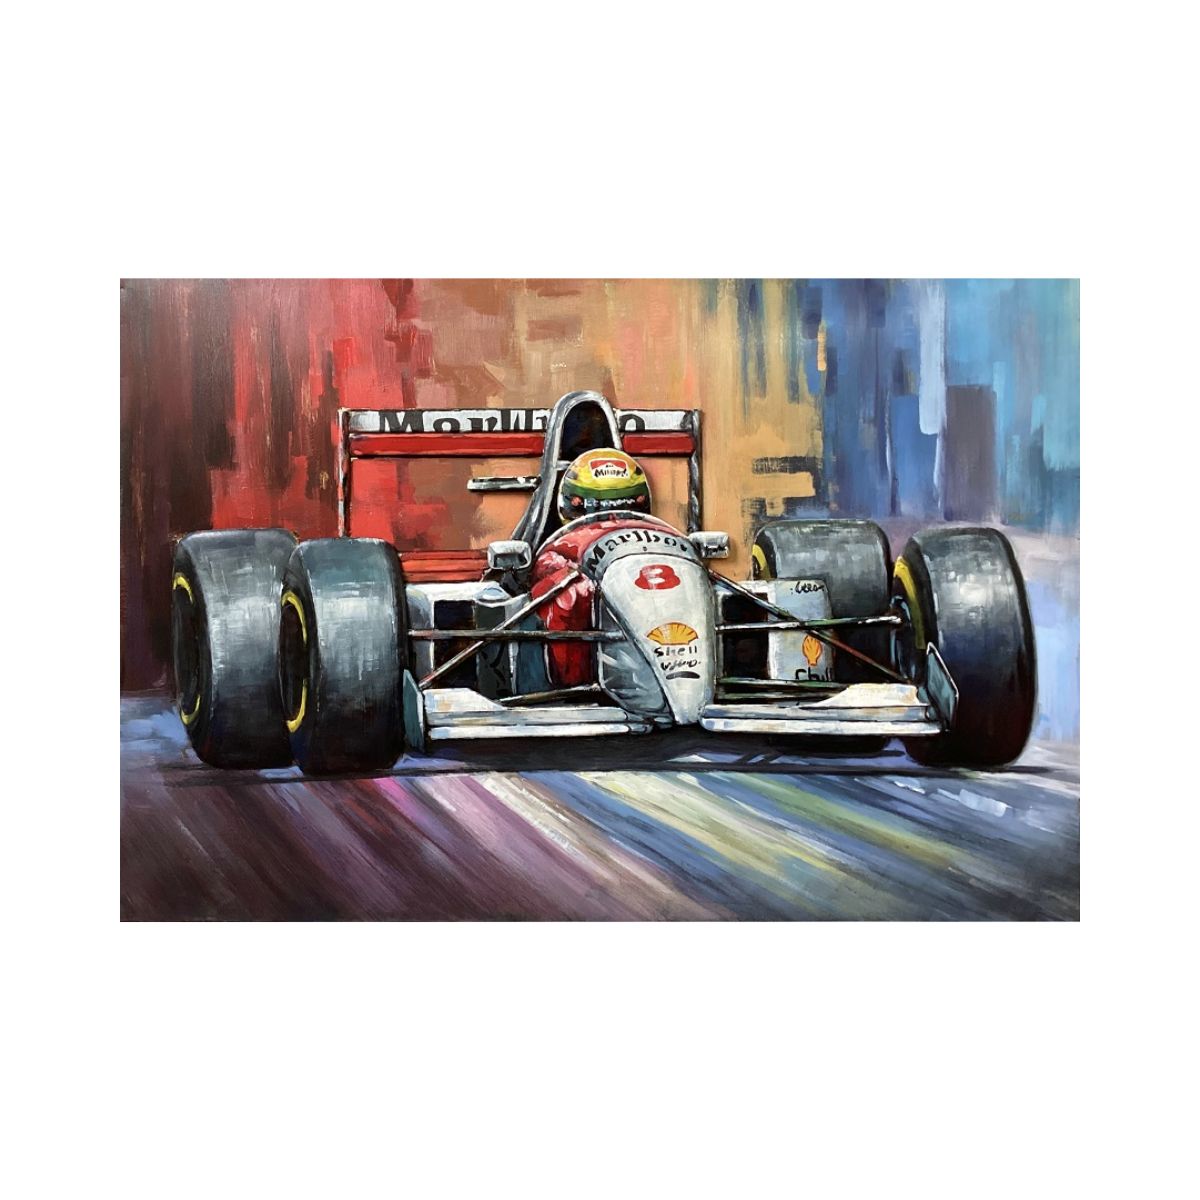 Tablouri - Tablou metal 3D metal F1 Ayrton Senna 120 x 80 x 4 cm, hectarul.ro